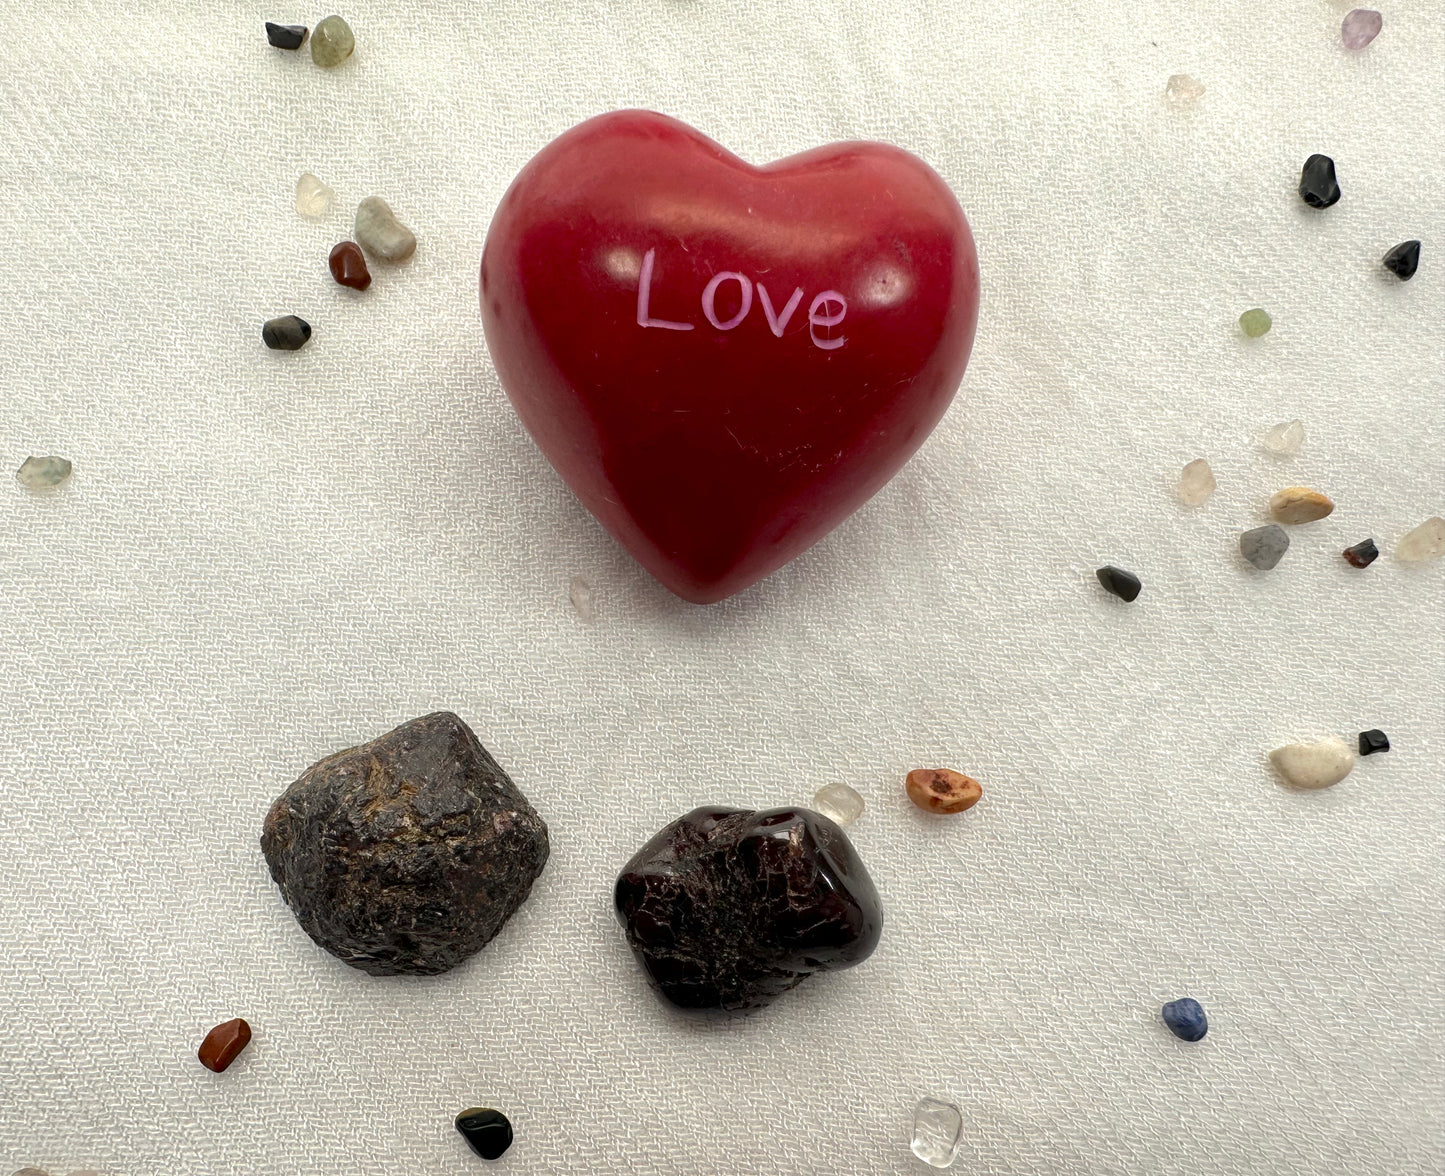 LOVE CELEBRATIONS: Romance, Romantic Love 2-piece set: Garnet and Soapstone Heart